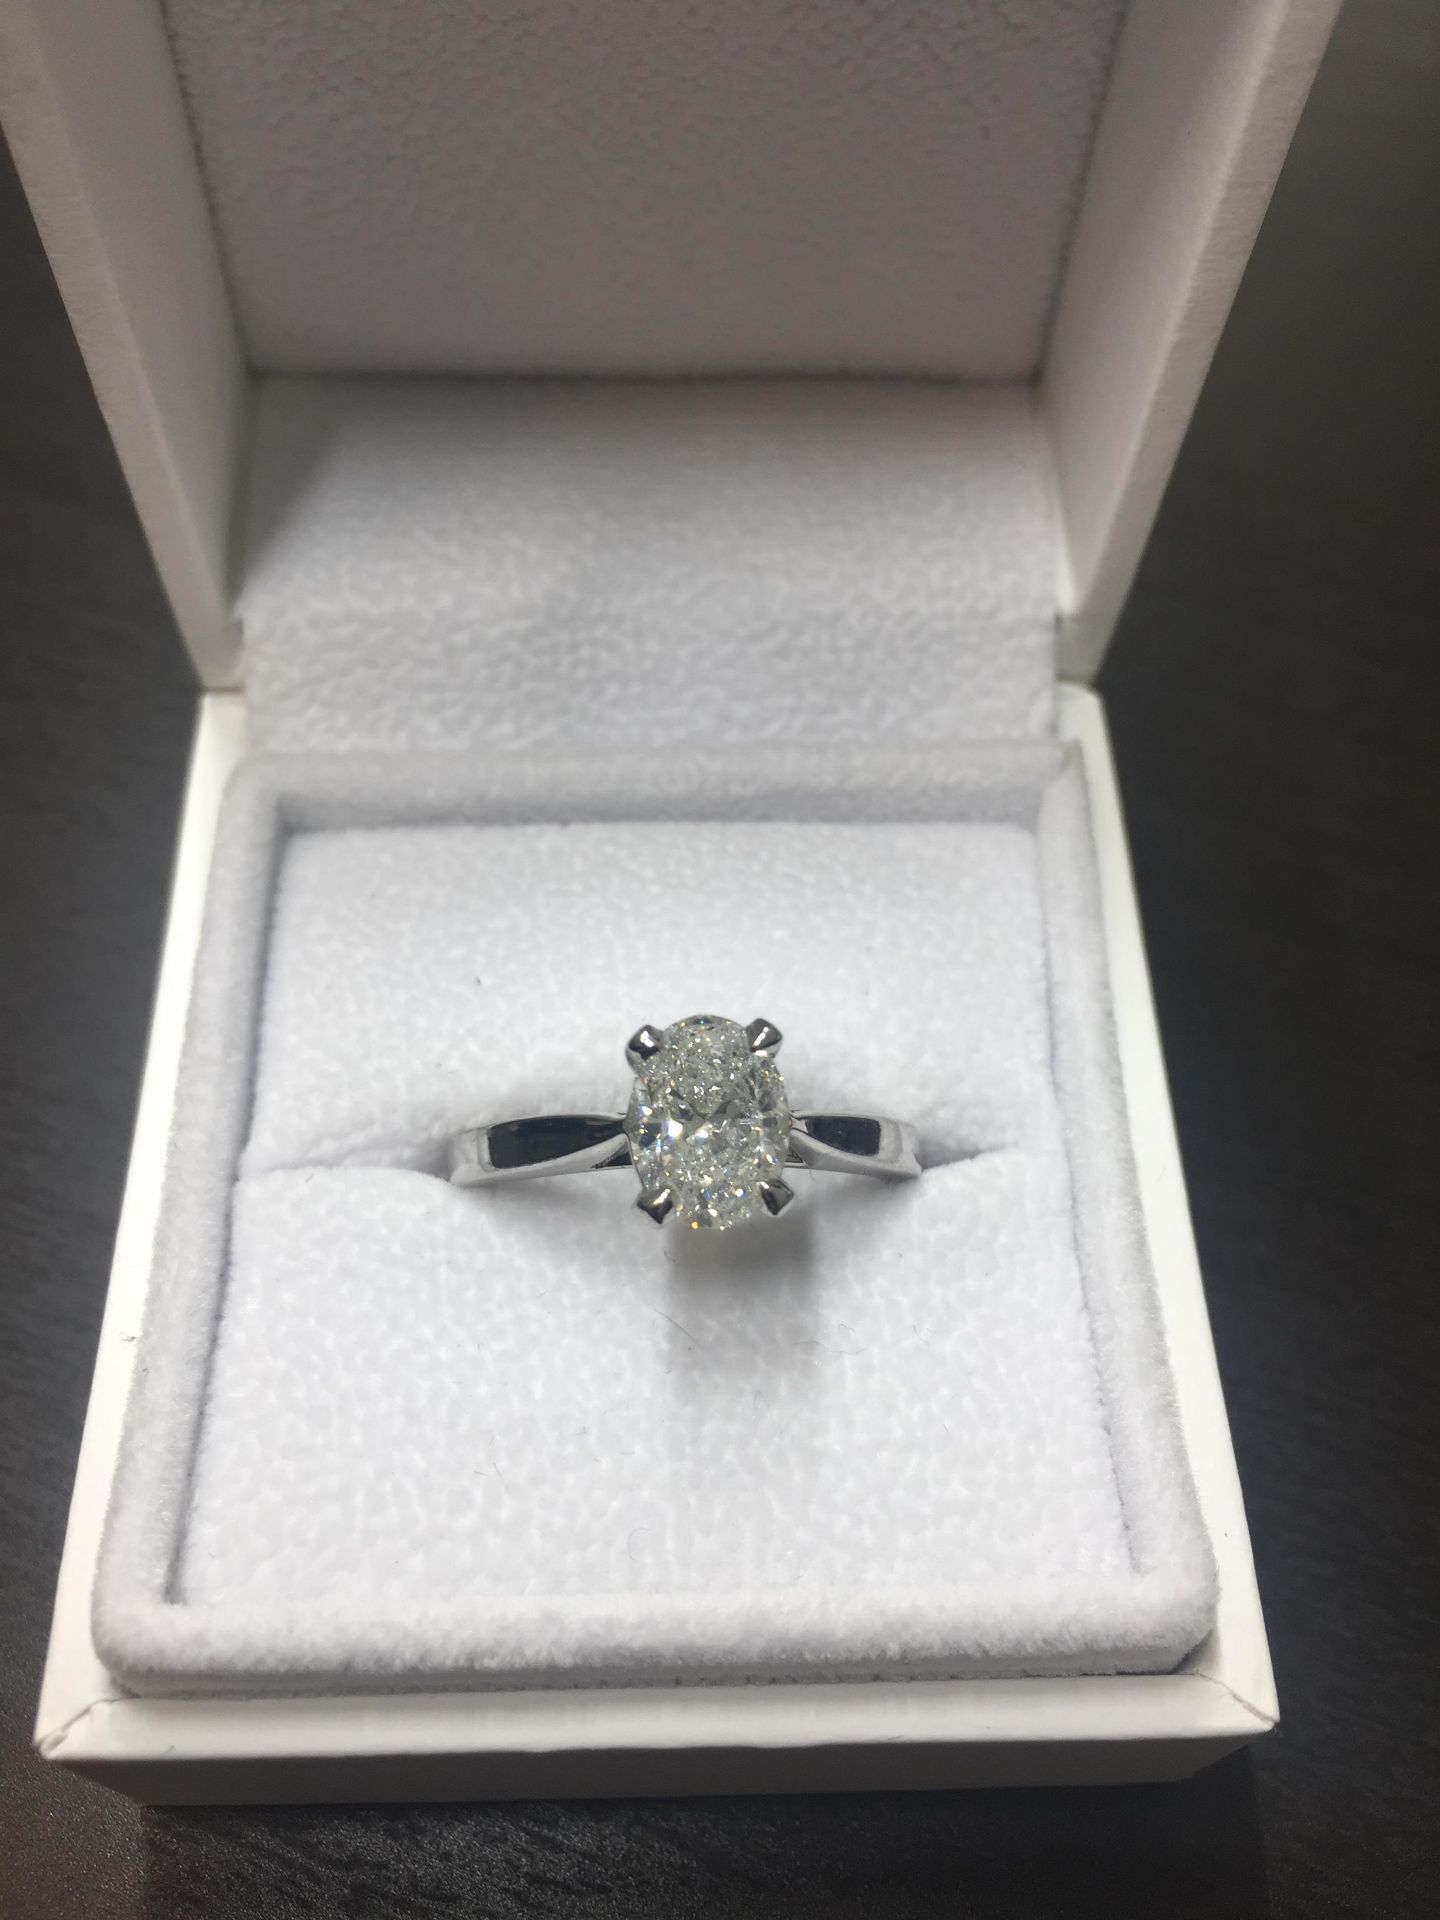 1.20ct Oval cut diamond ,F colour si2 clarity,4 claw platinum setting ,IGI certification 239675312, - Image 3 of 4